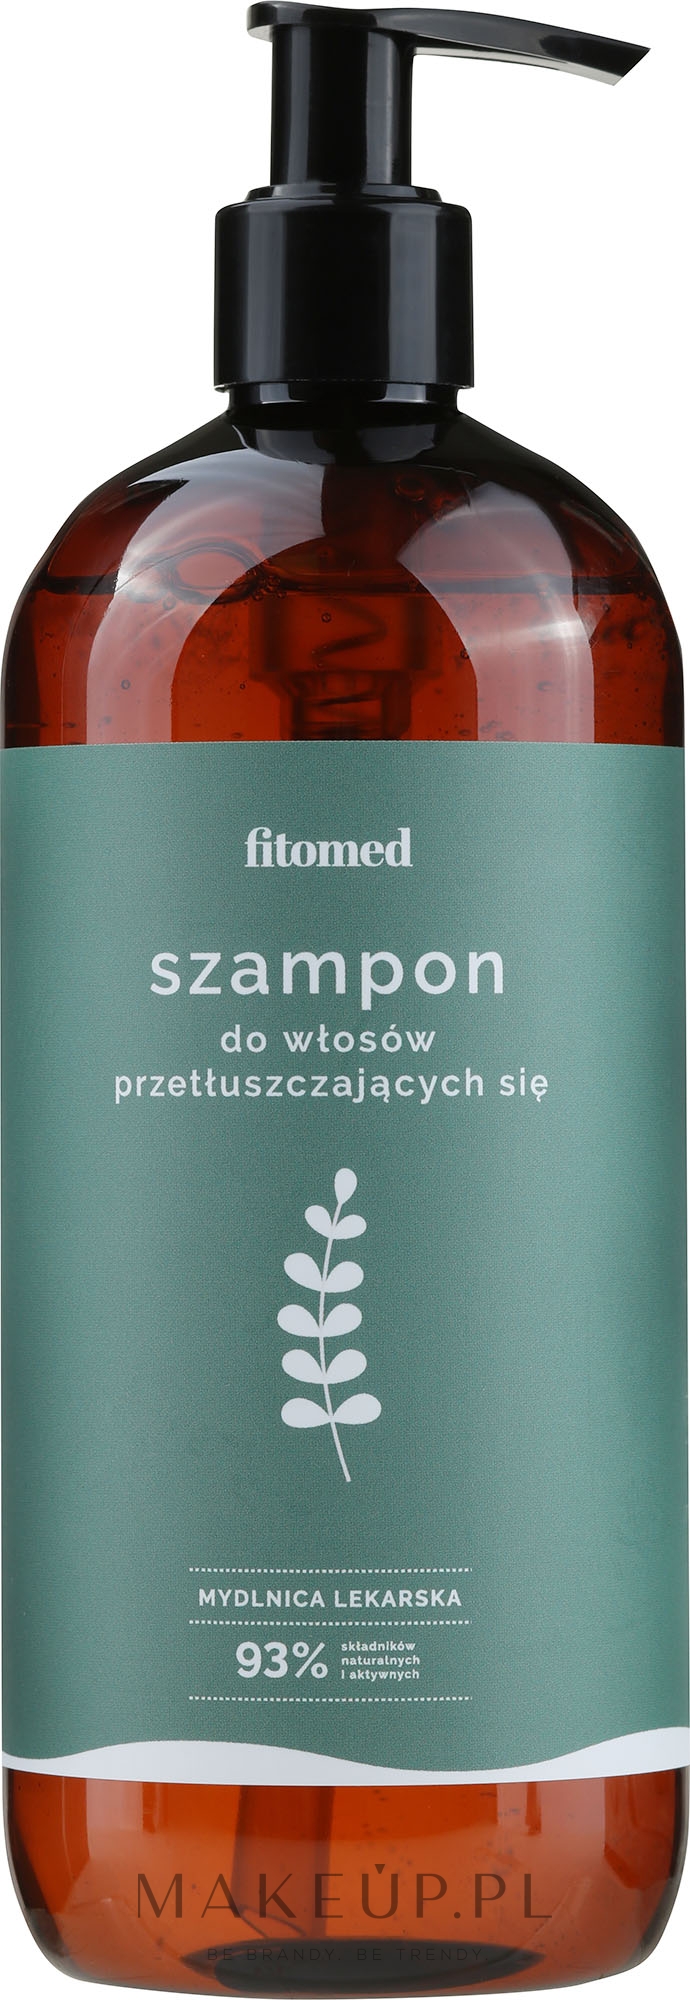 szampon z mydlnicy lekarskiej fitomed